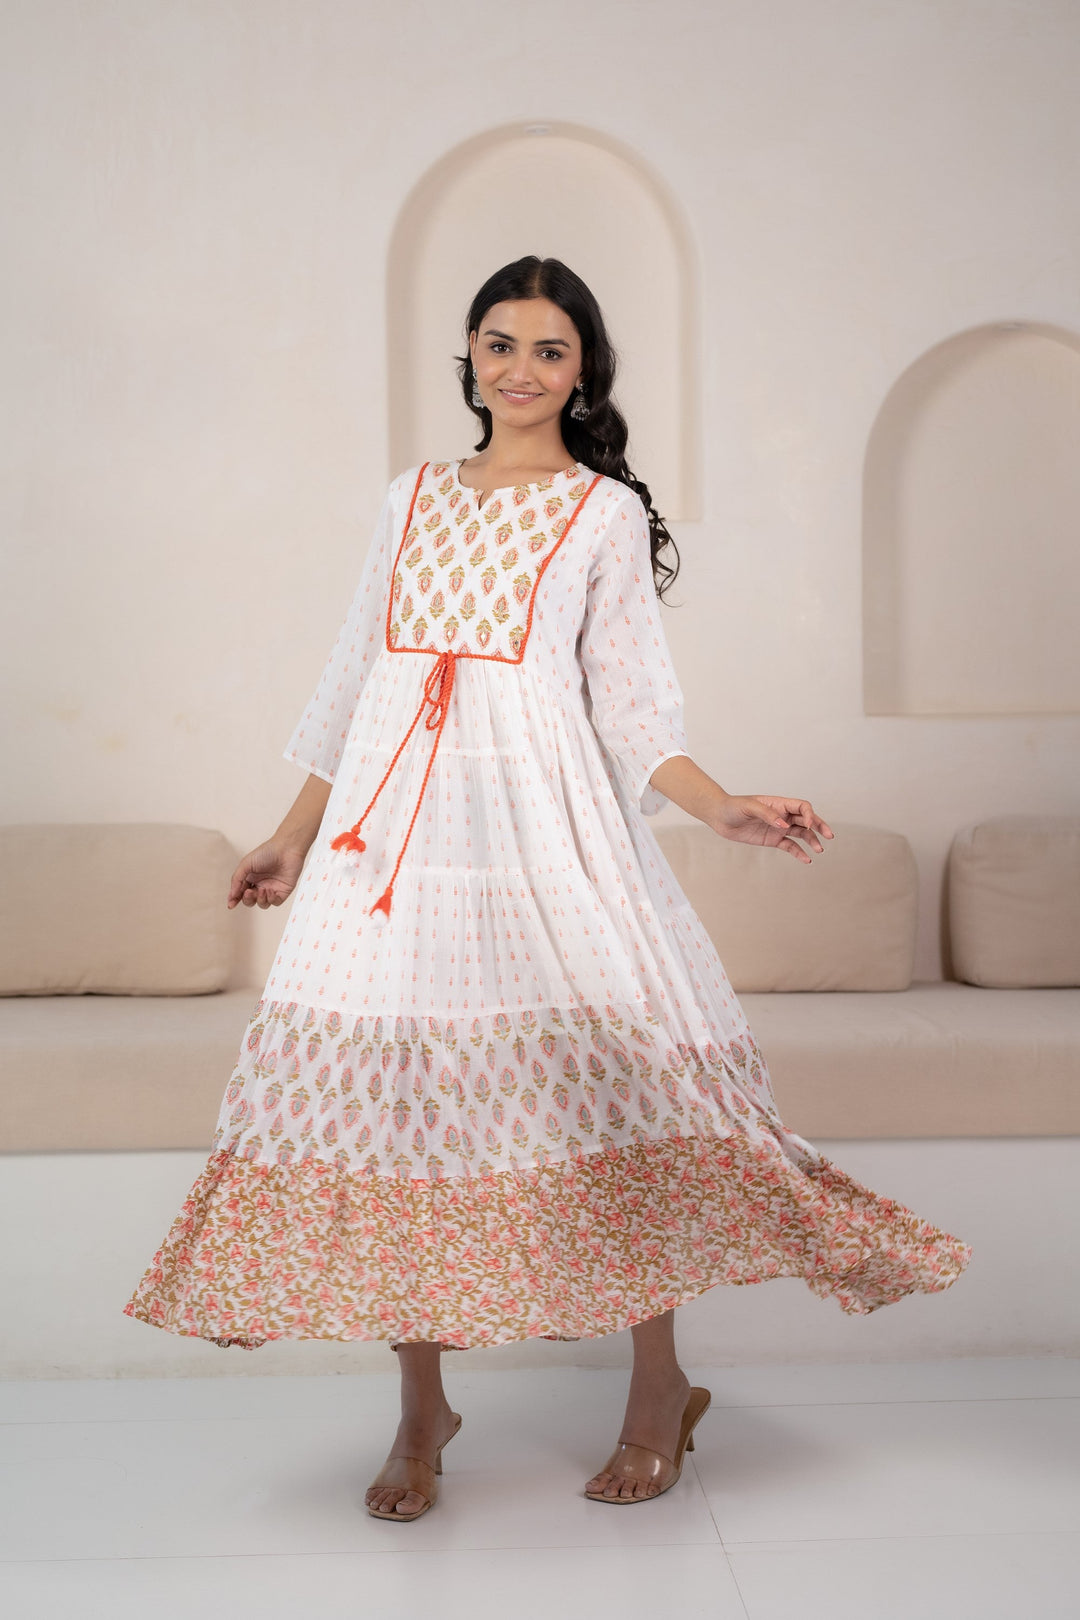 White Indo-western Dress for Women - 1pc set